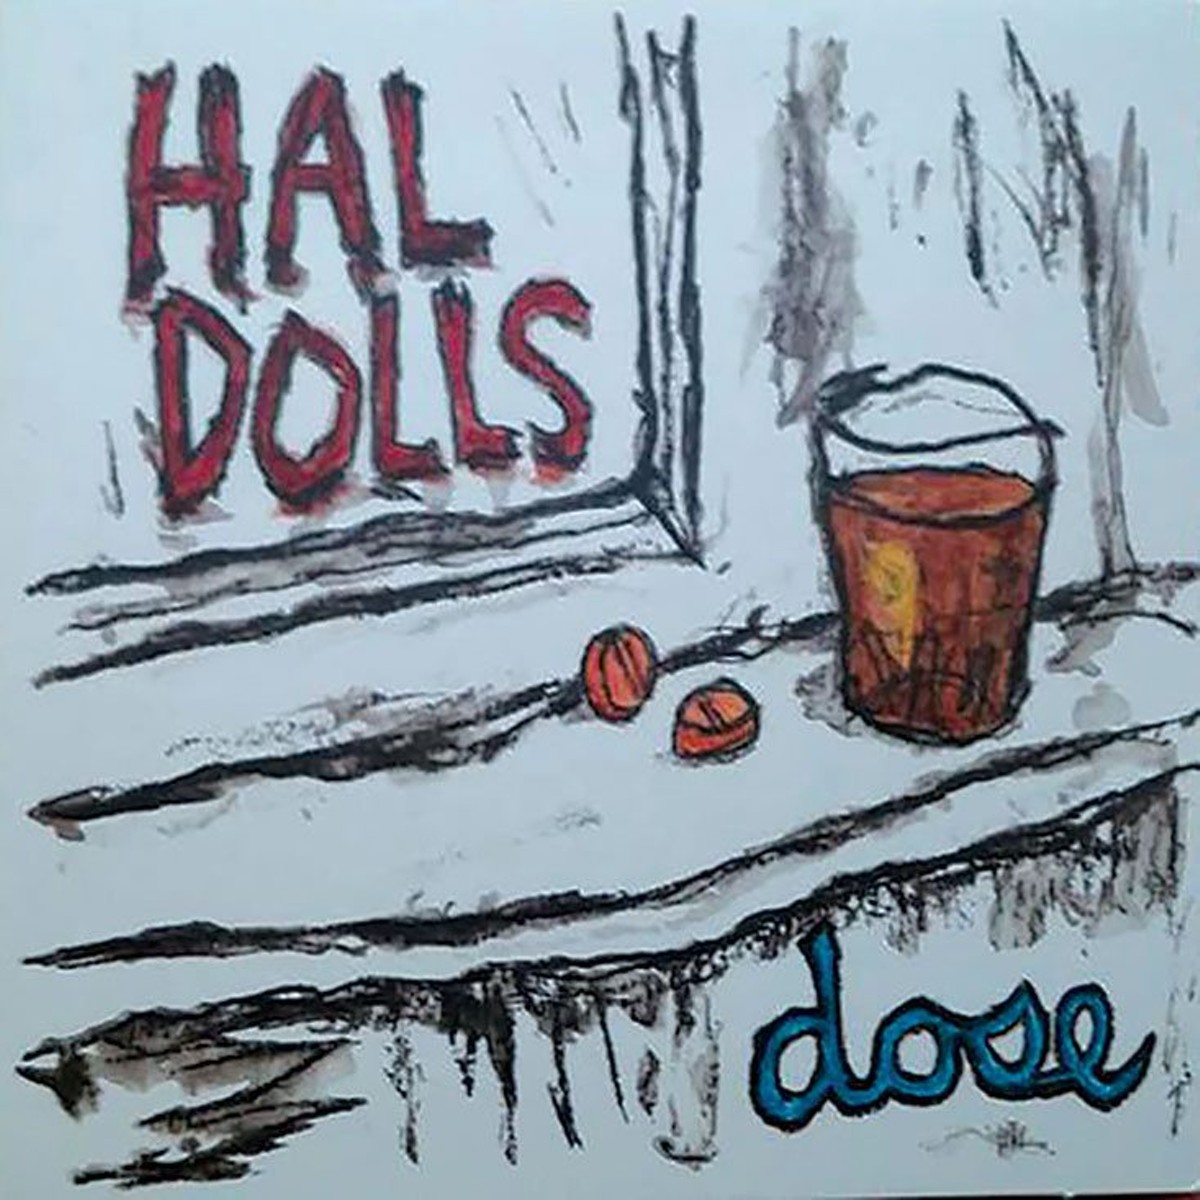 Hal Dolls: Dose